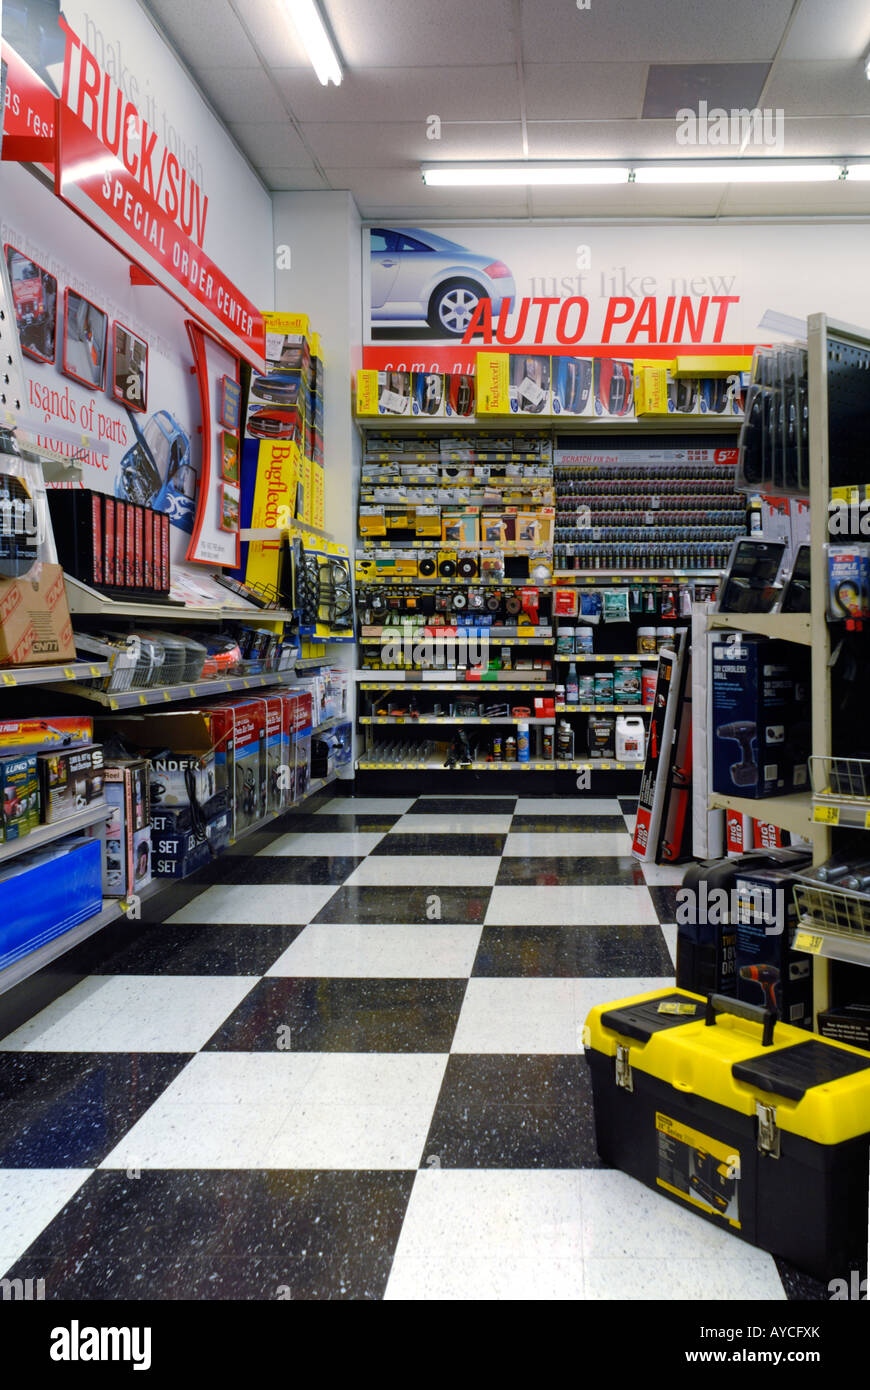 interior of an Auto store Photo - Alamy